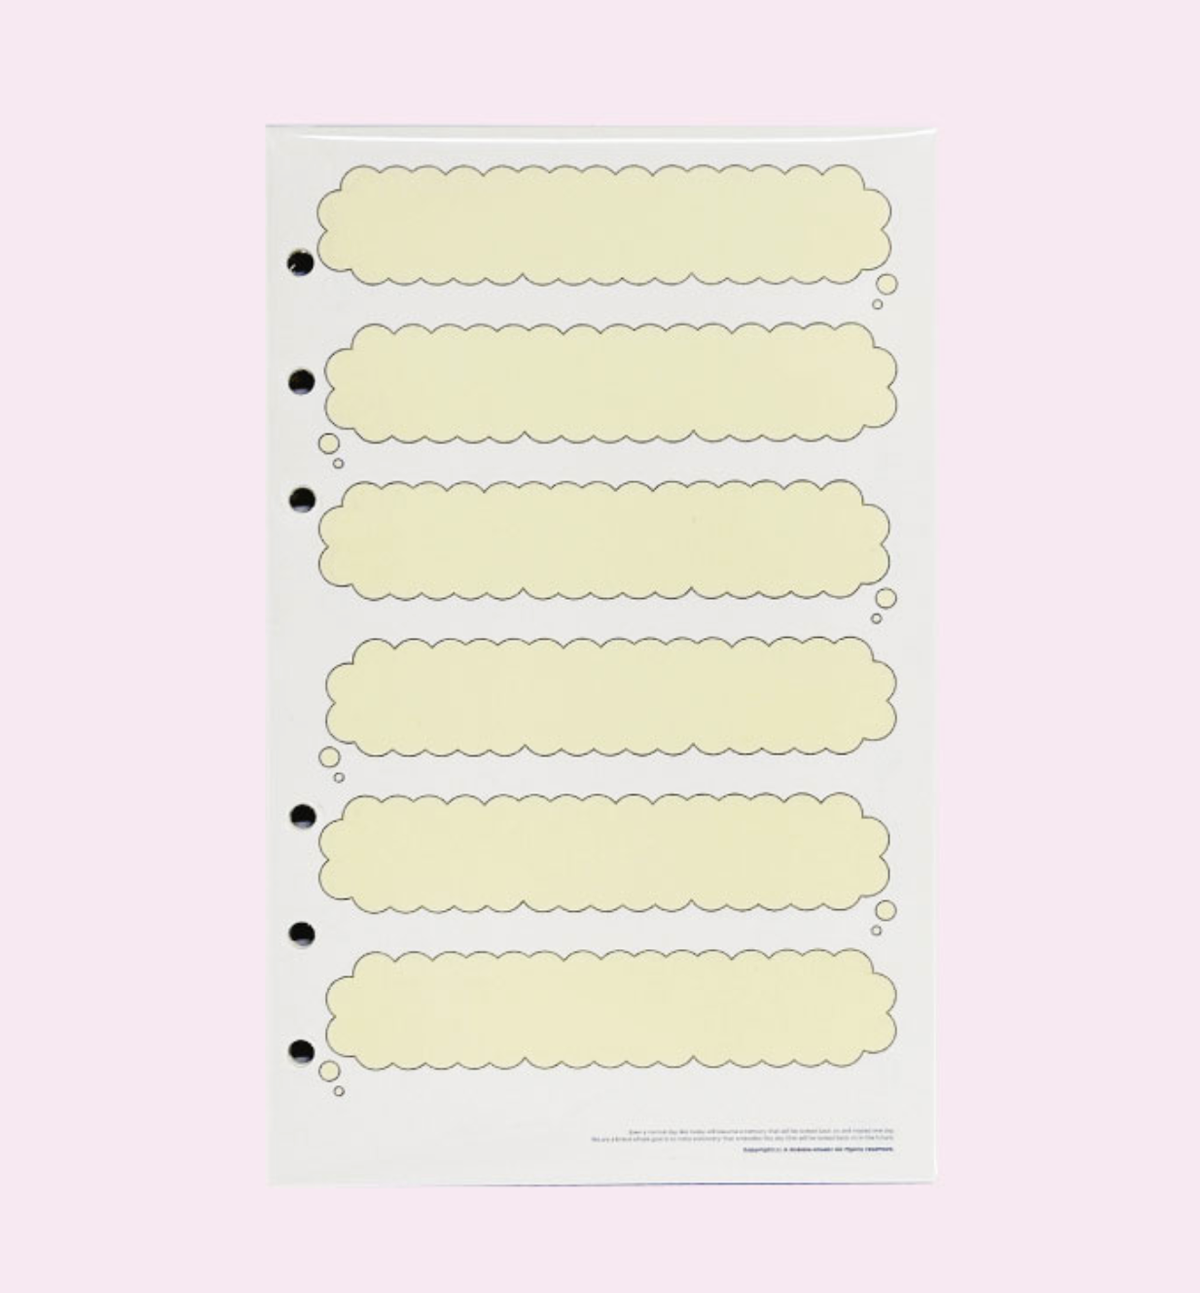 A6 Steaming Speech Bubble Paper Refill [Yellow]